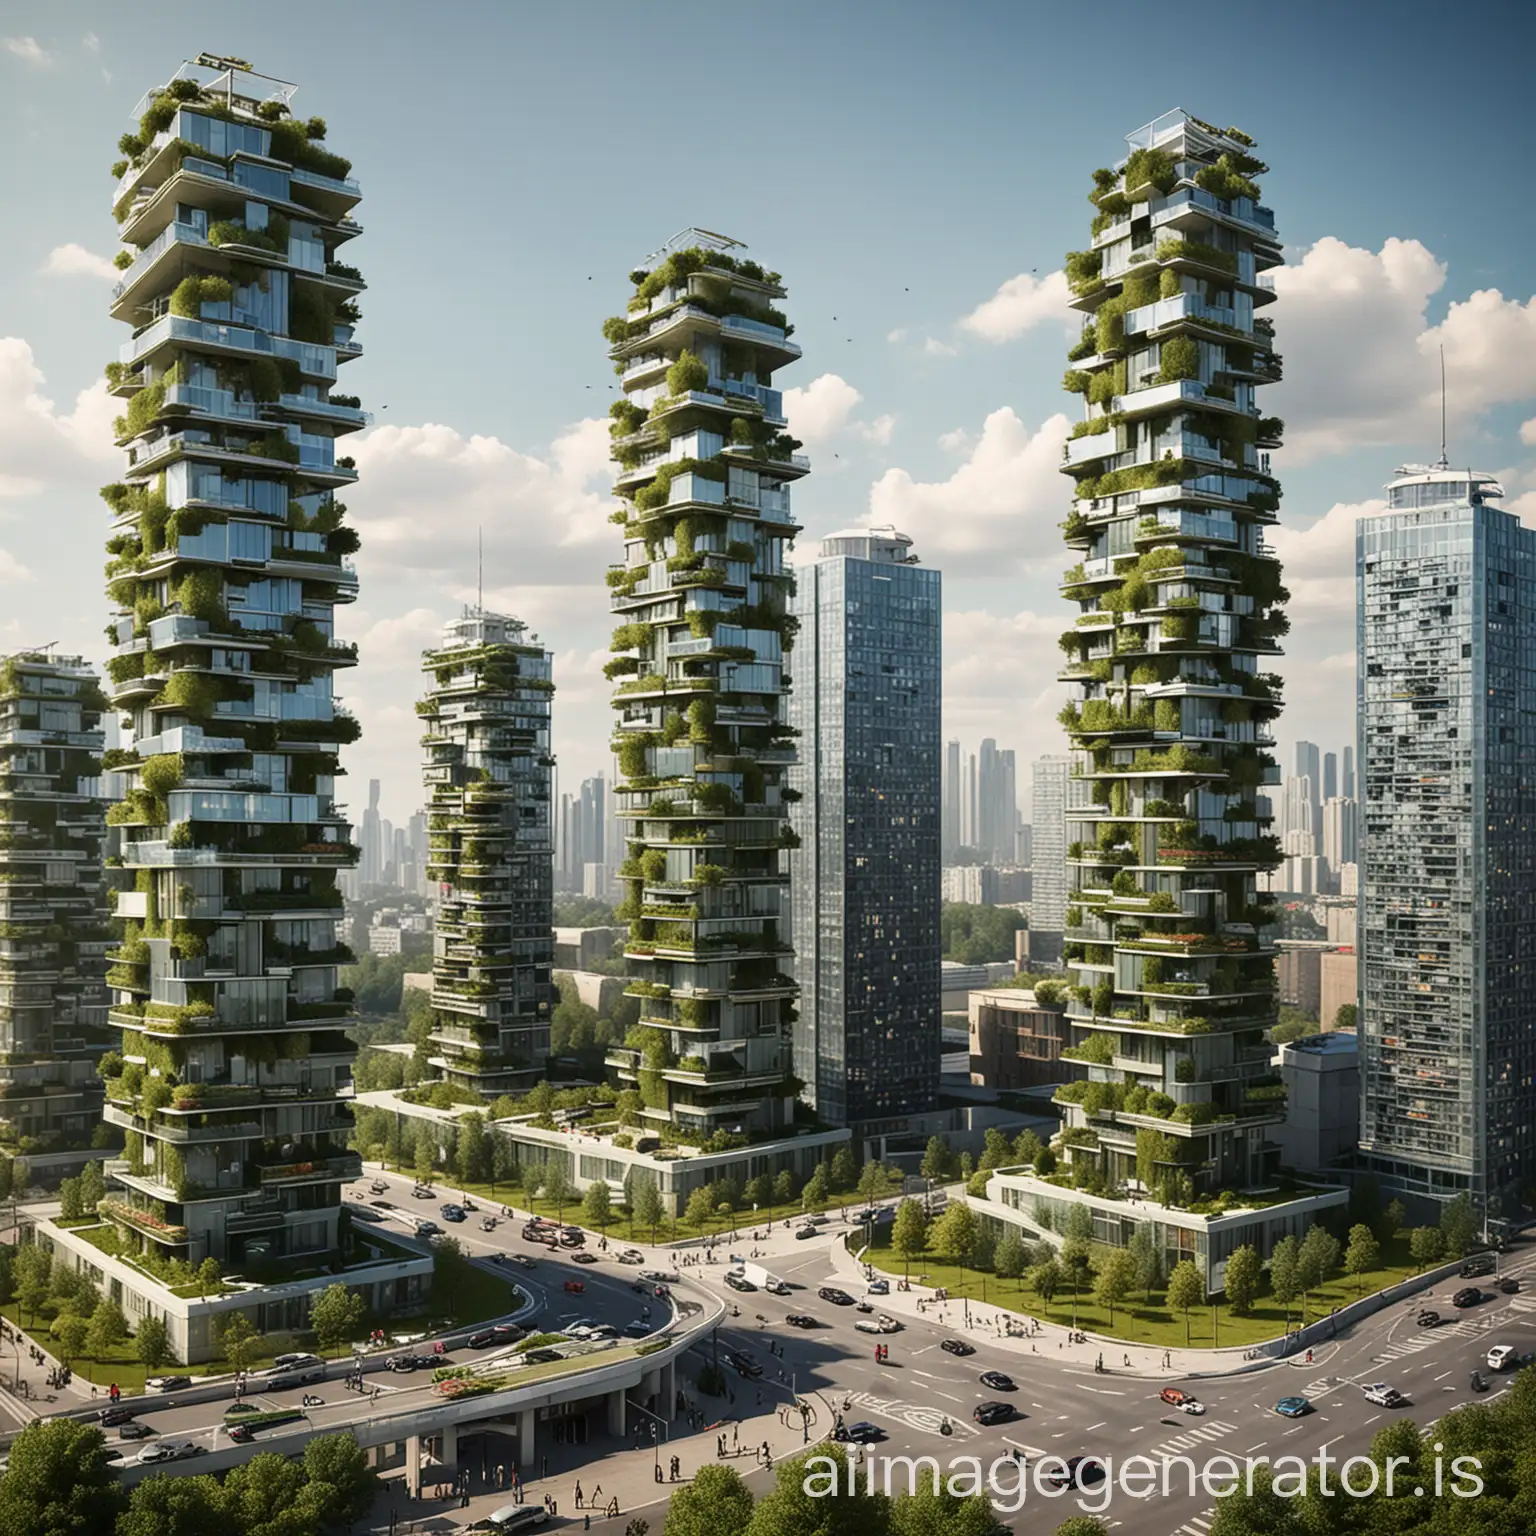 Futuristic-EcoFriendly-Cityscape-with-Integrated-Social-Facilities